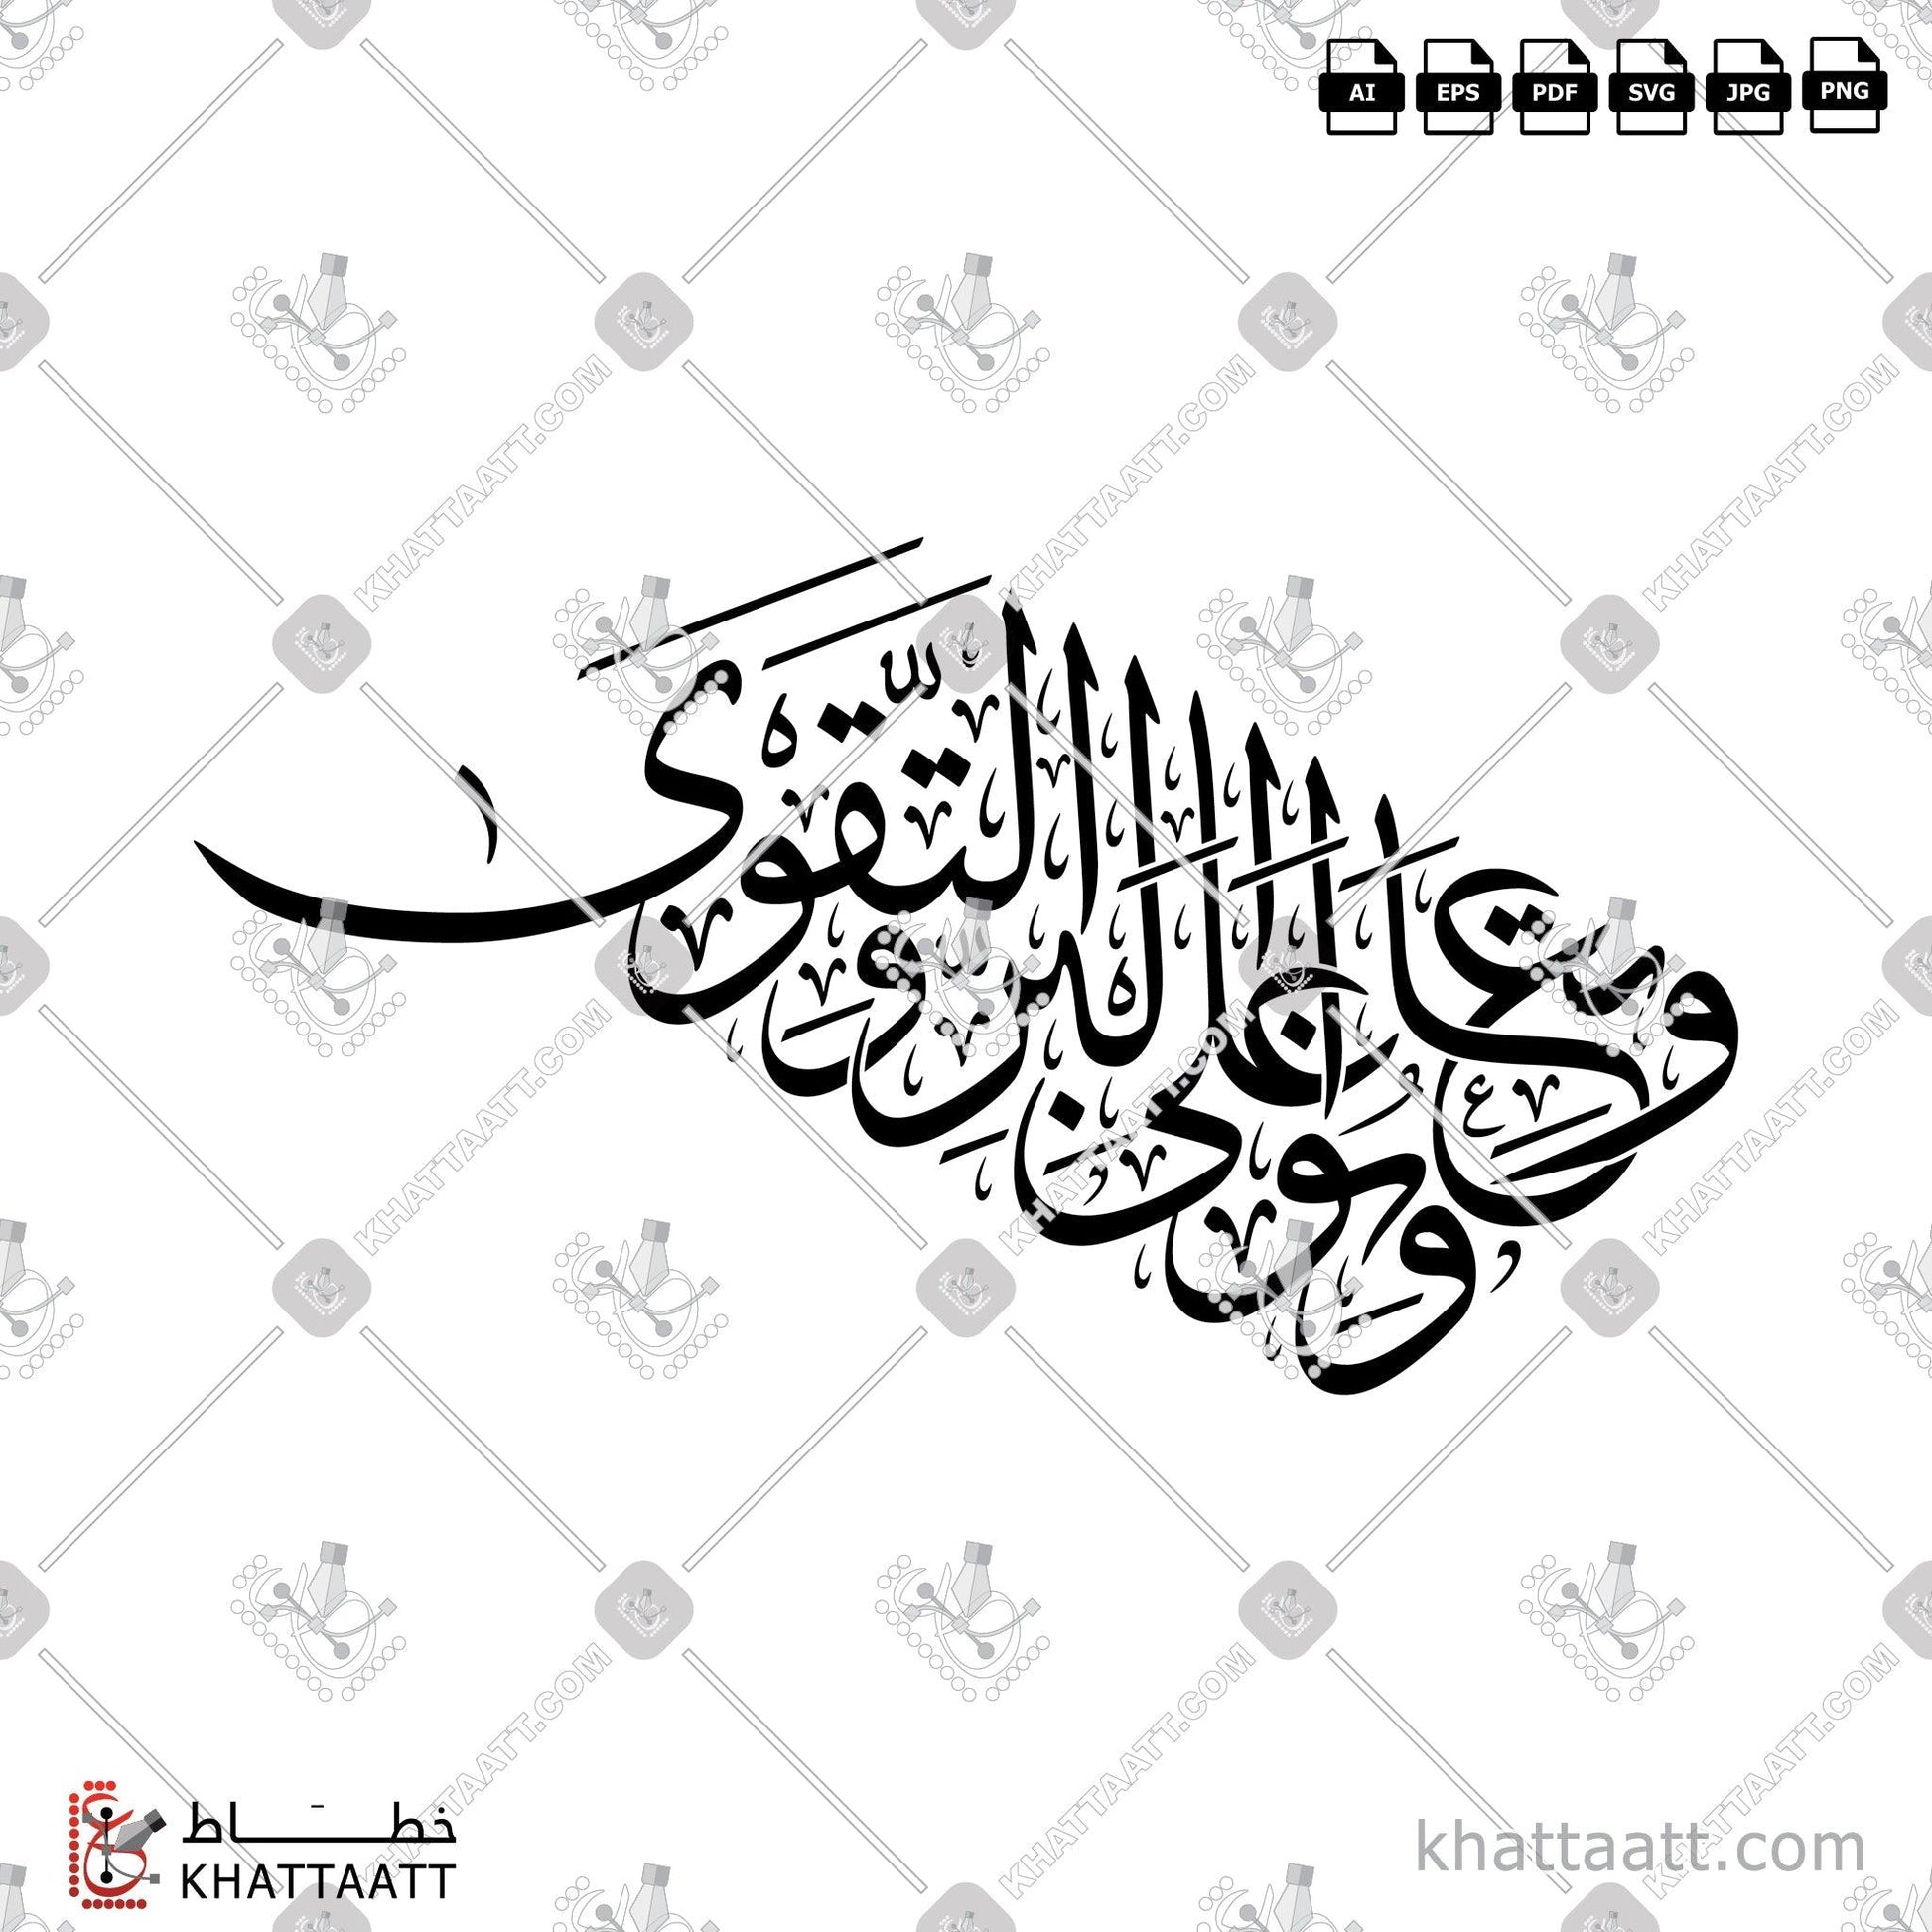 Download Arabic Calligraphy of وتعاونوا على البر والتقوى in Thuluth - خط الثلث in vector and .png